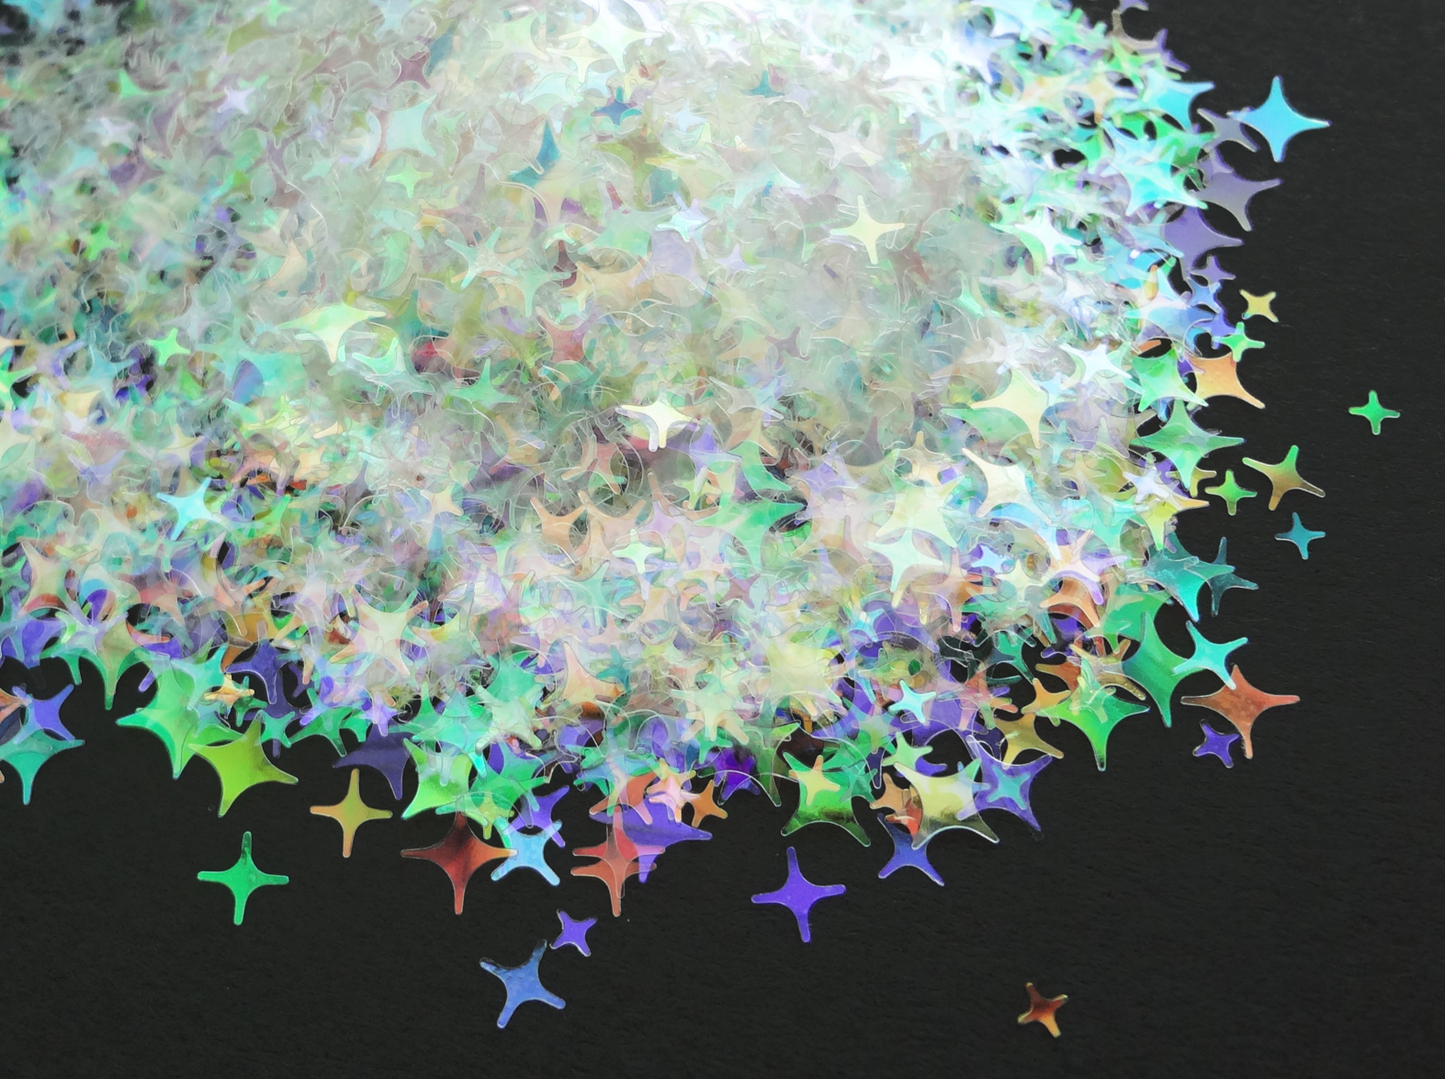 Holographic Gold Stars Shape Glitter 2mm Stars, Tiny Star Glitter 